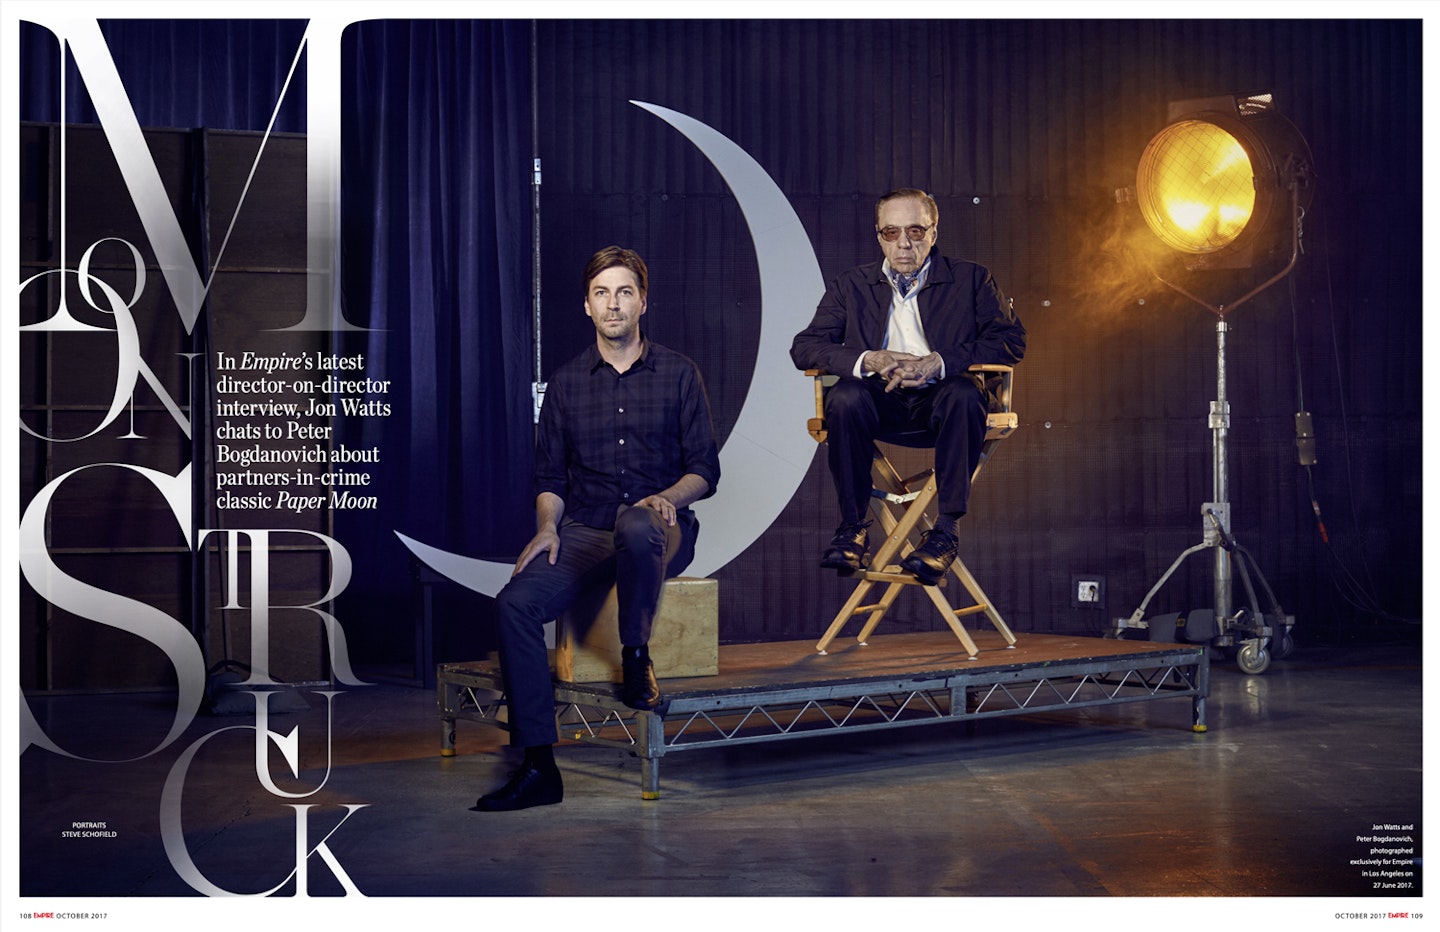 Peter Bogdanovich Talks Paper Moon With Spider-Man Director Jon Watts